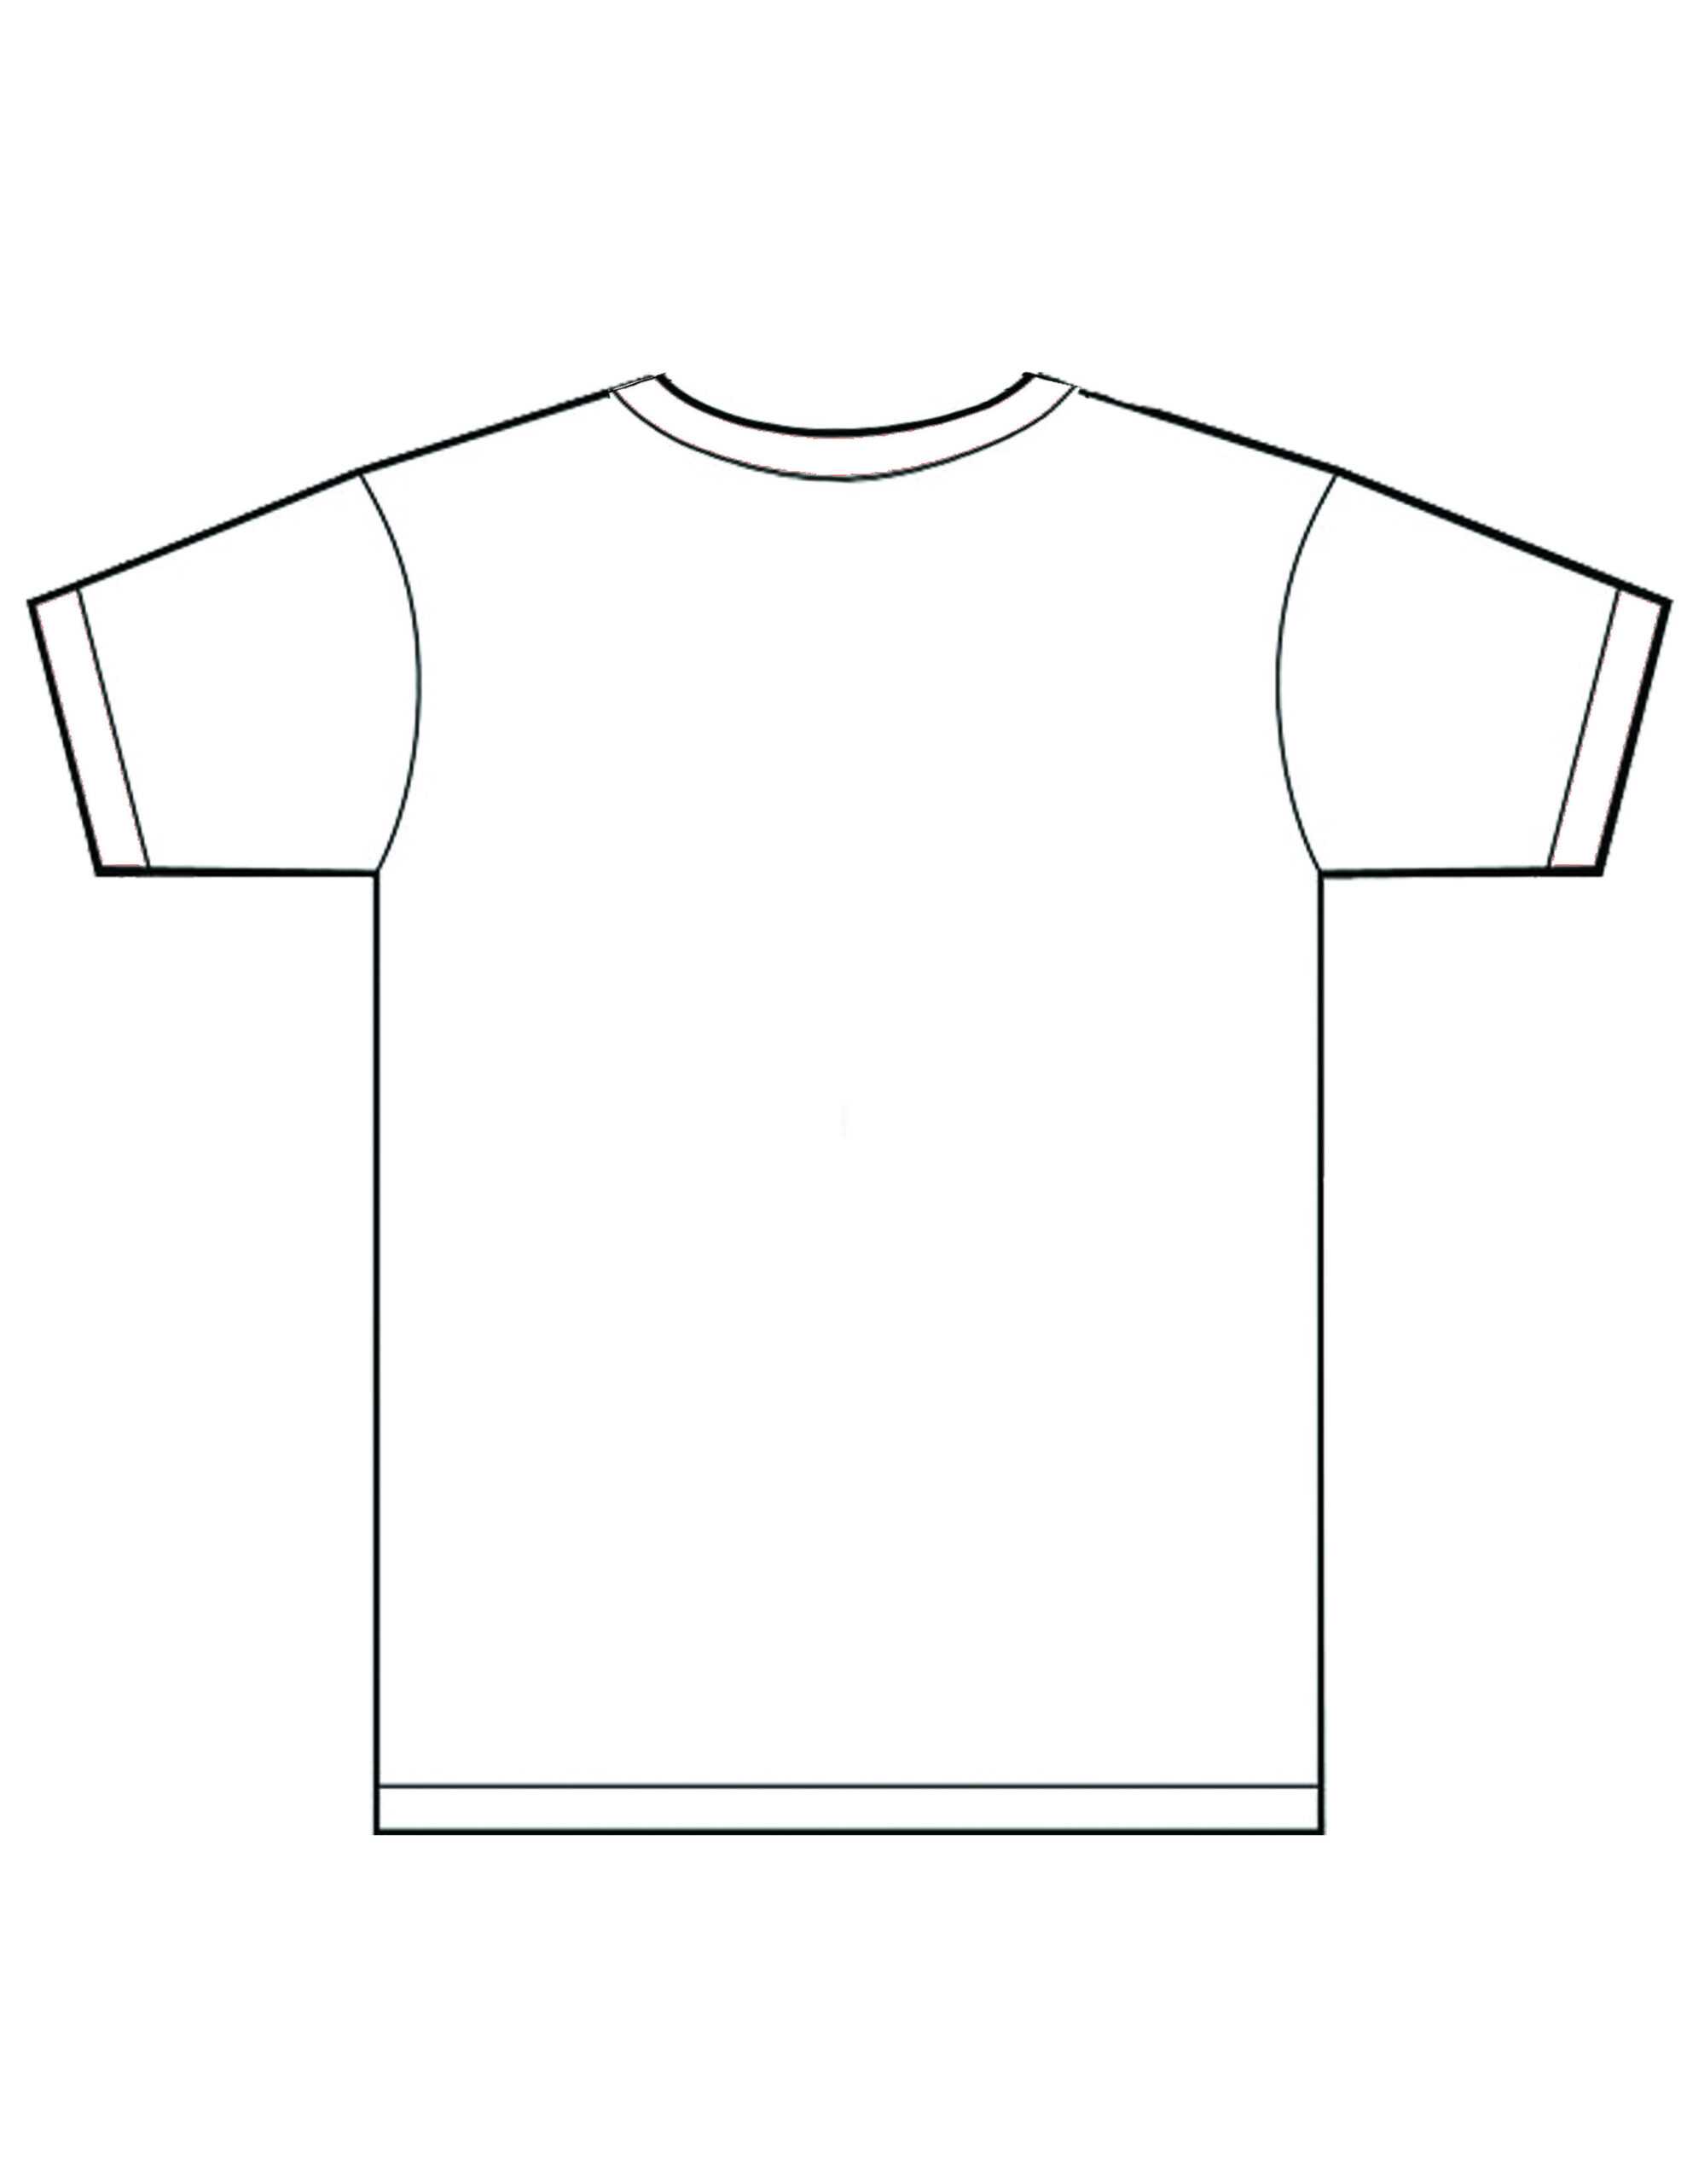 Blank T Shirts Template Photoshop | Rldm Within Blank T Shirt Design Template Psd